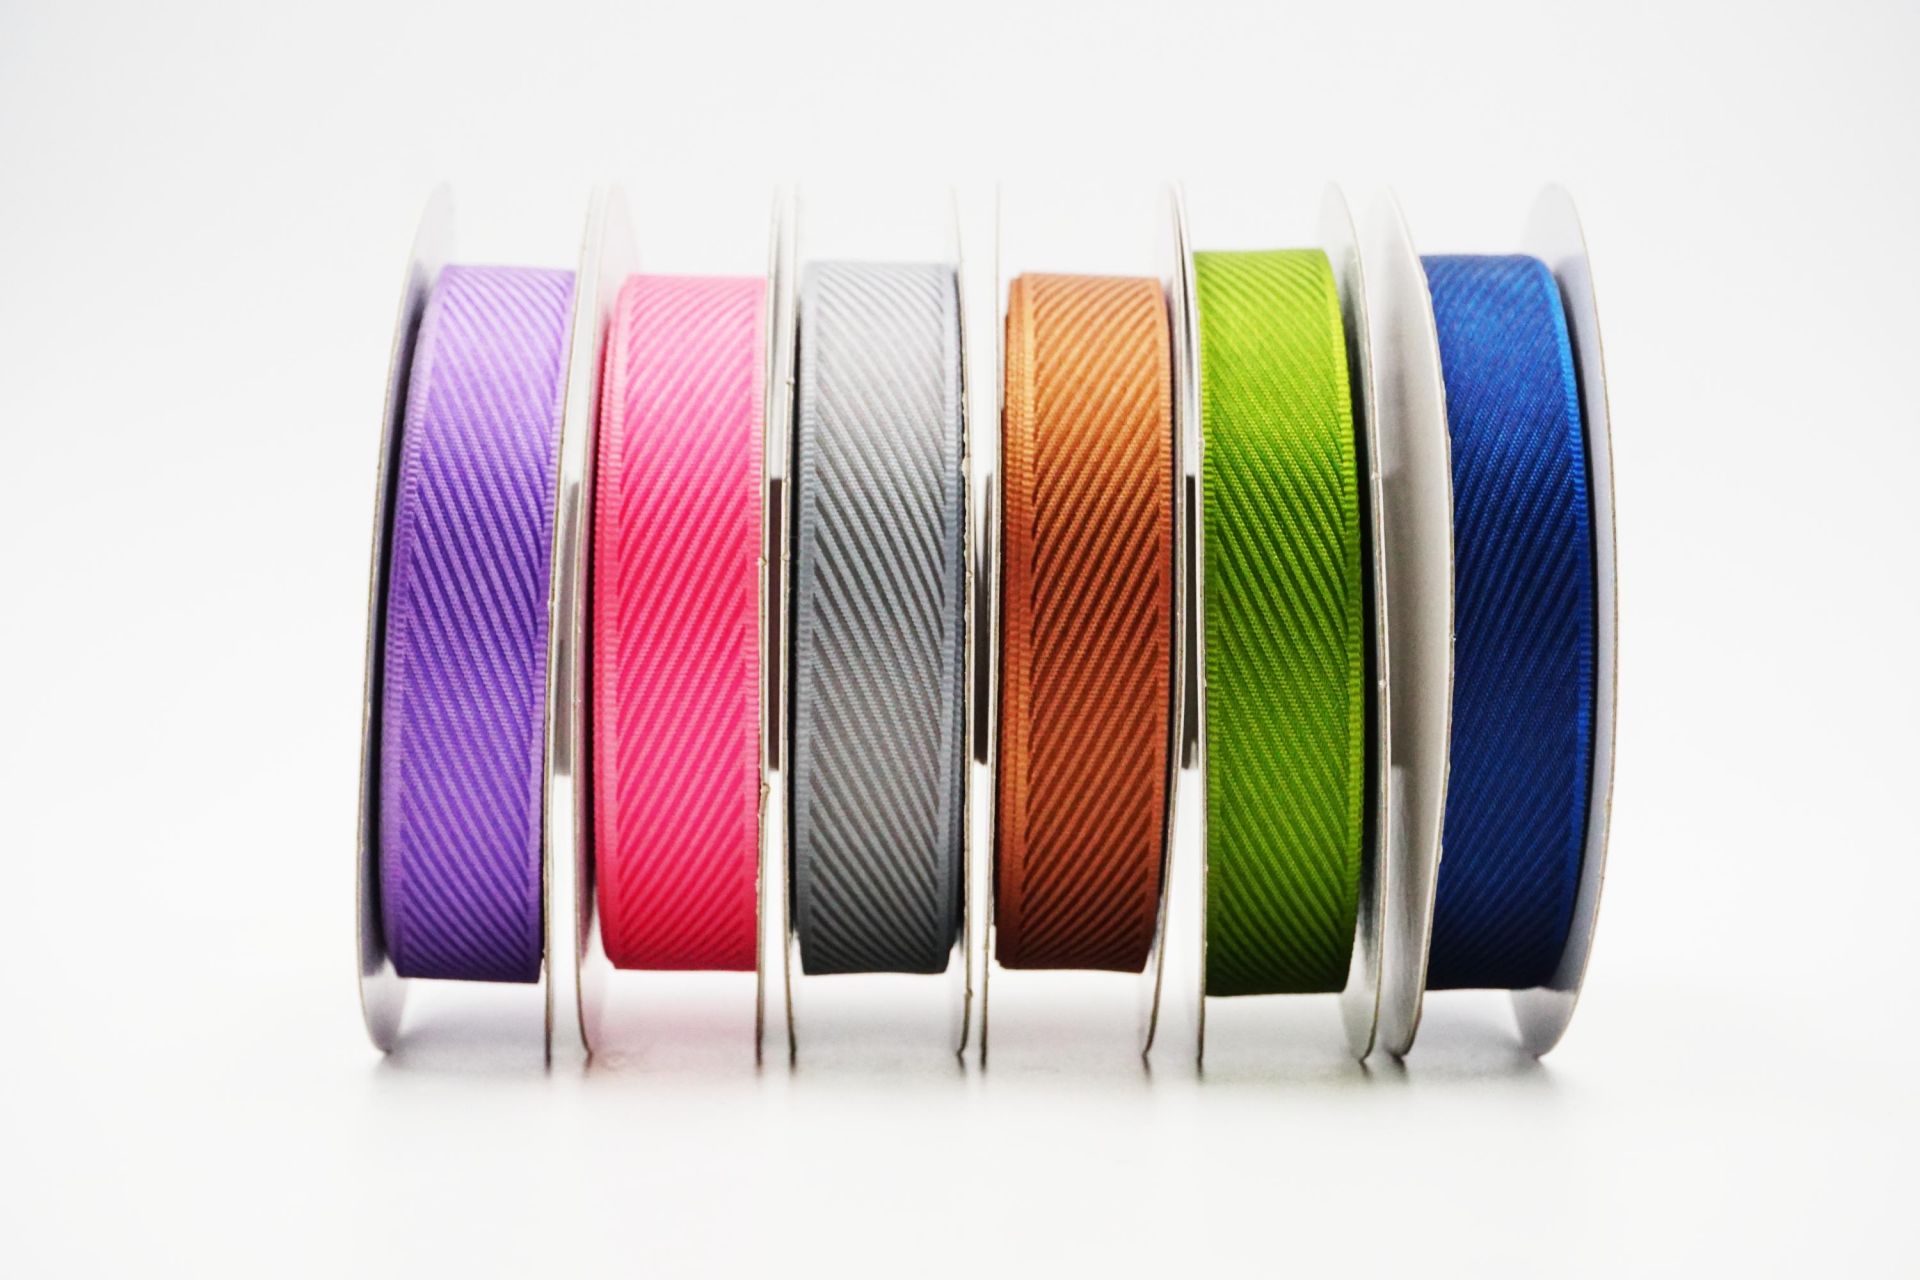 Woven Grosgrain Stripe Ribbon - Multiple Colorways